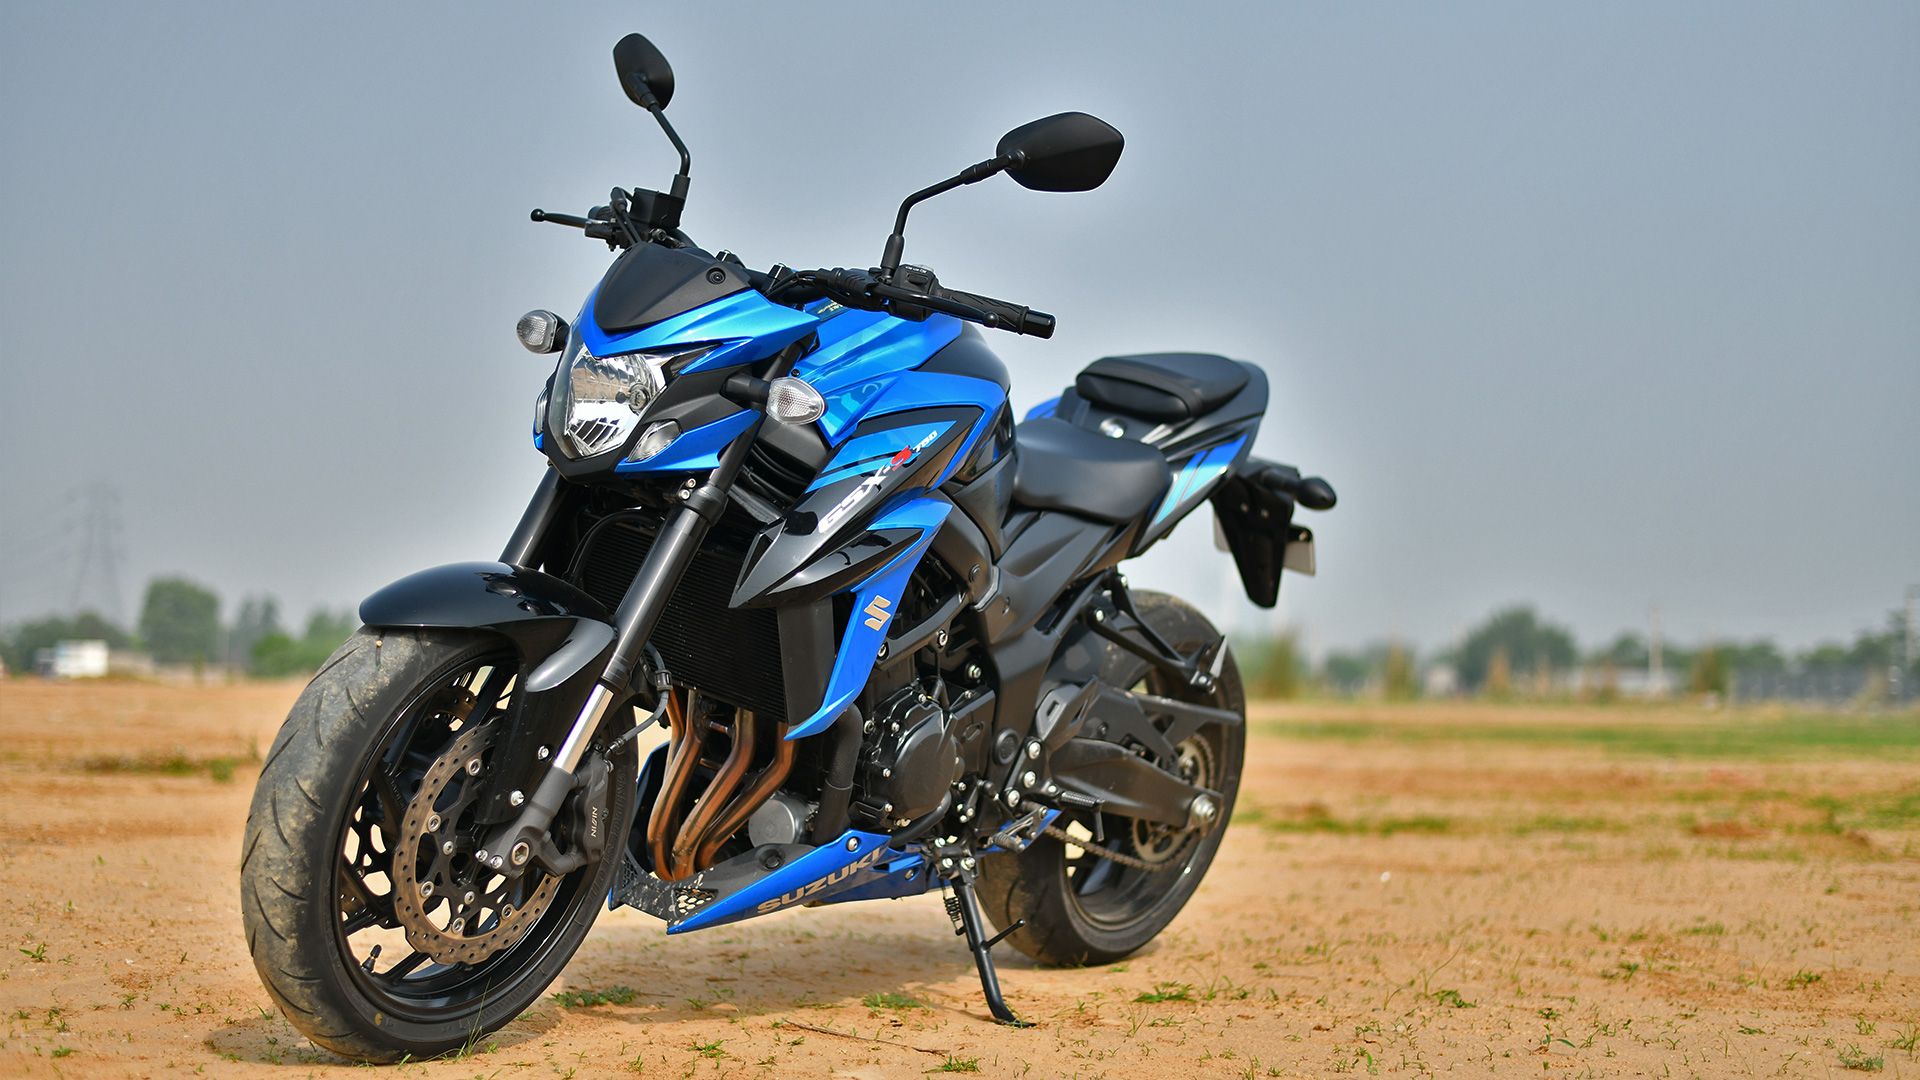 Тест-драйв мотоцикла Suzuki GSR750